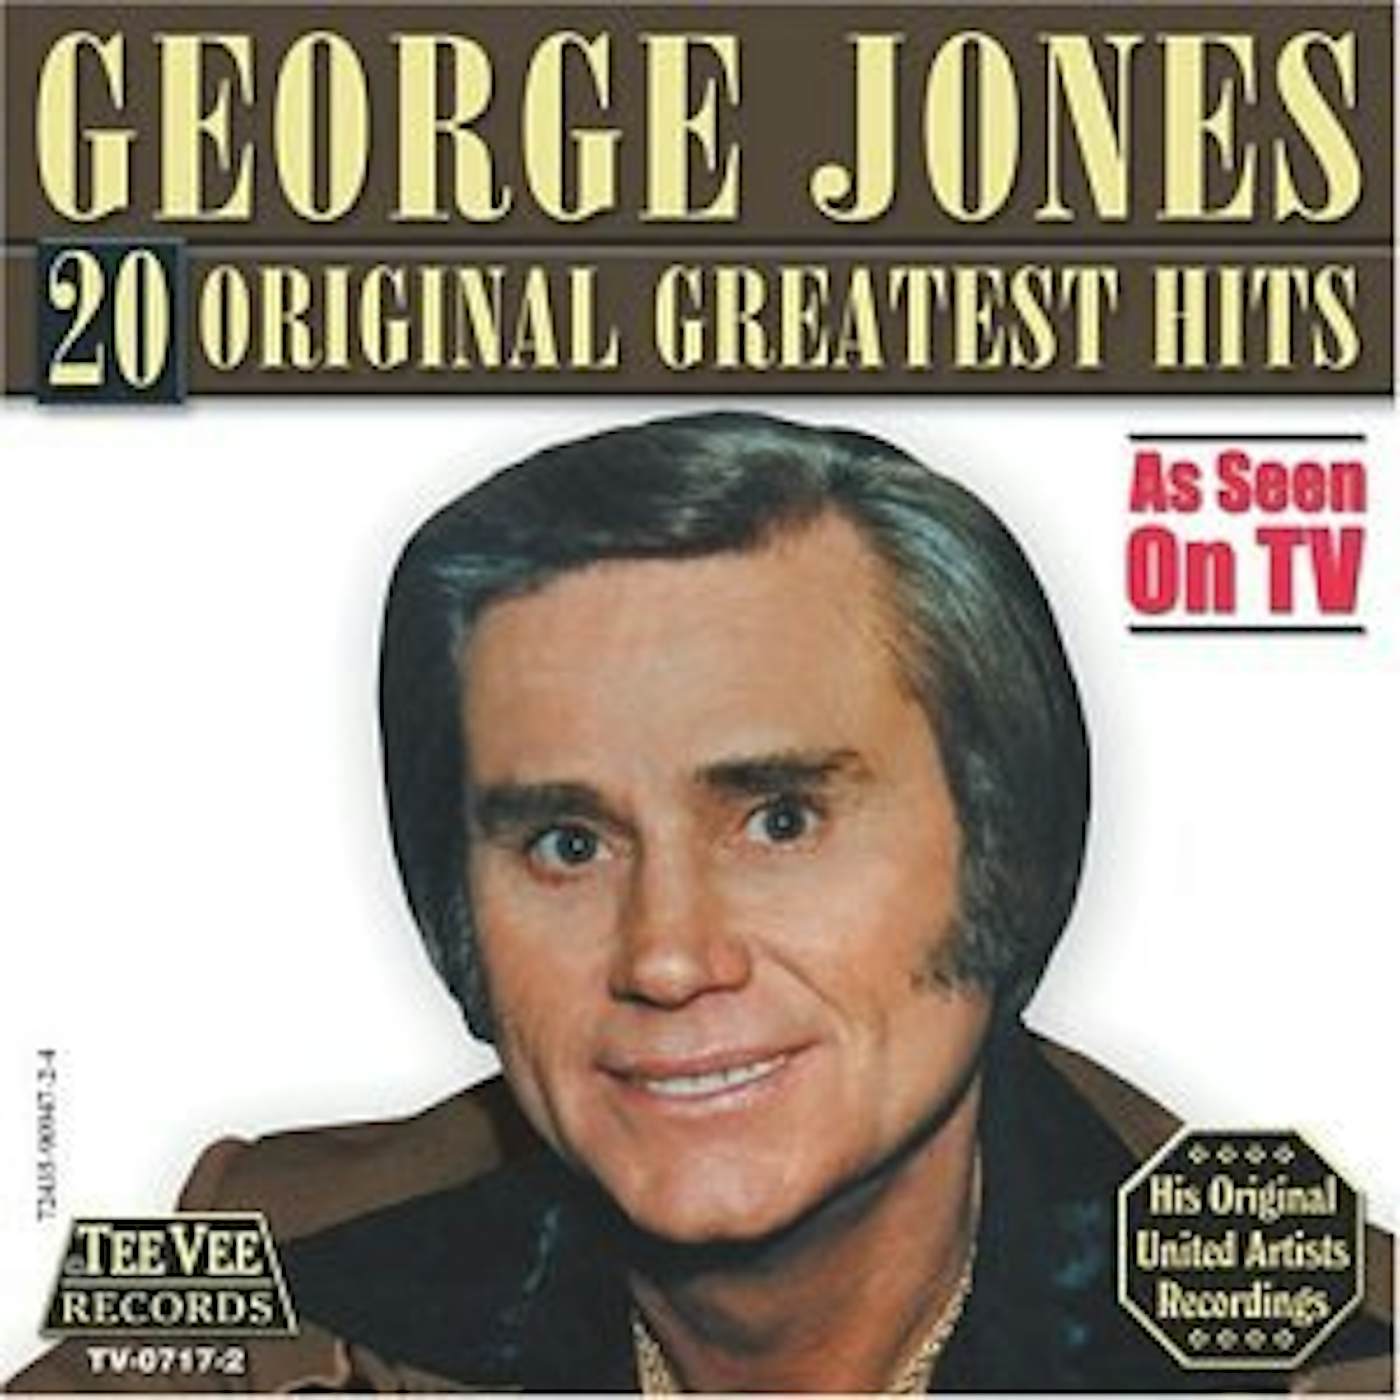 George Jones 20 ORIGINAL GREATEST HITS CD